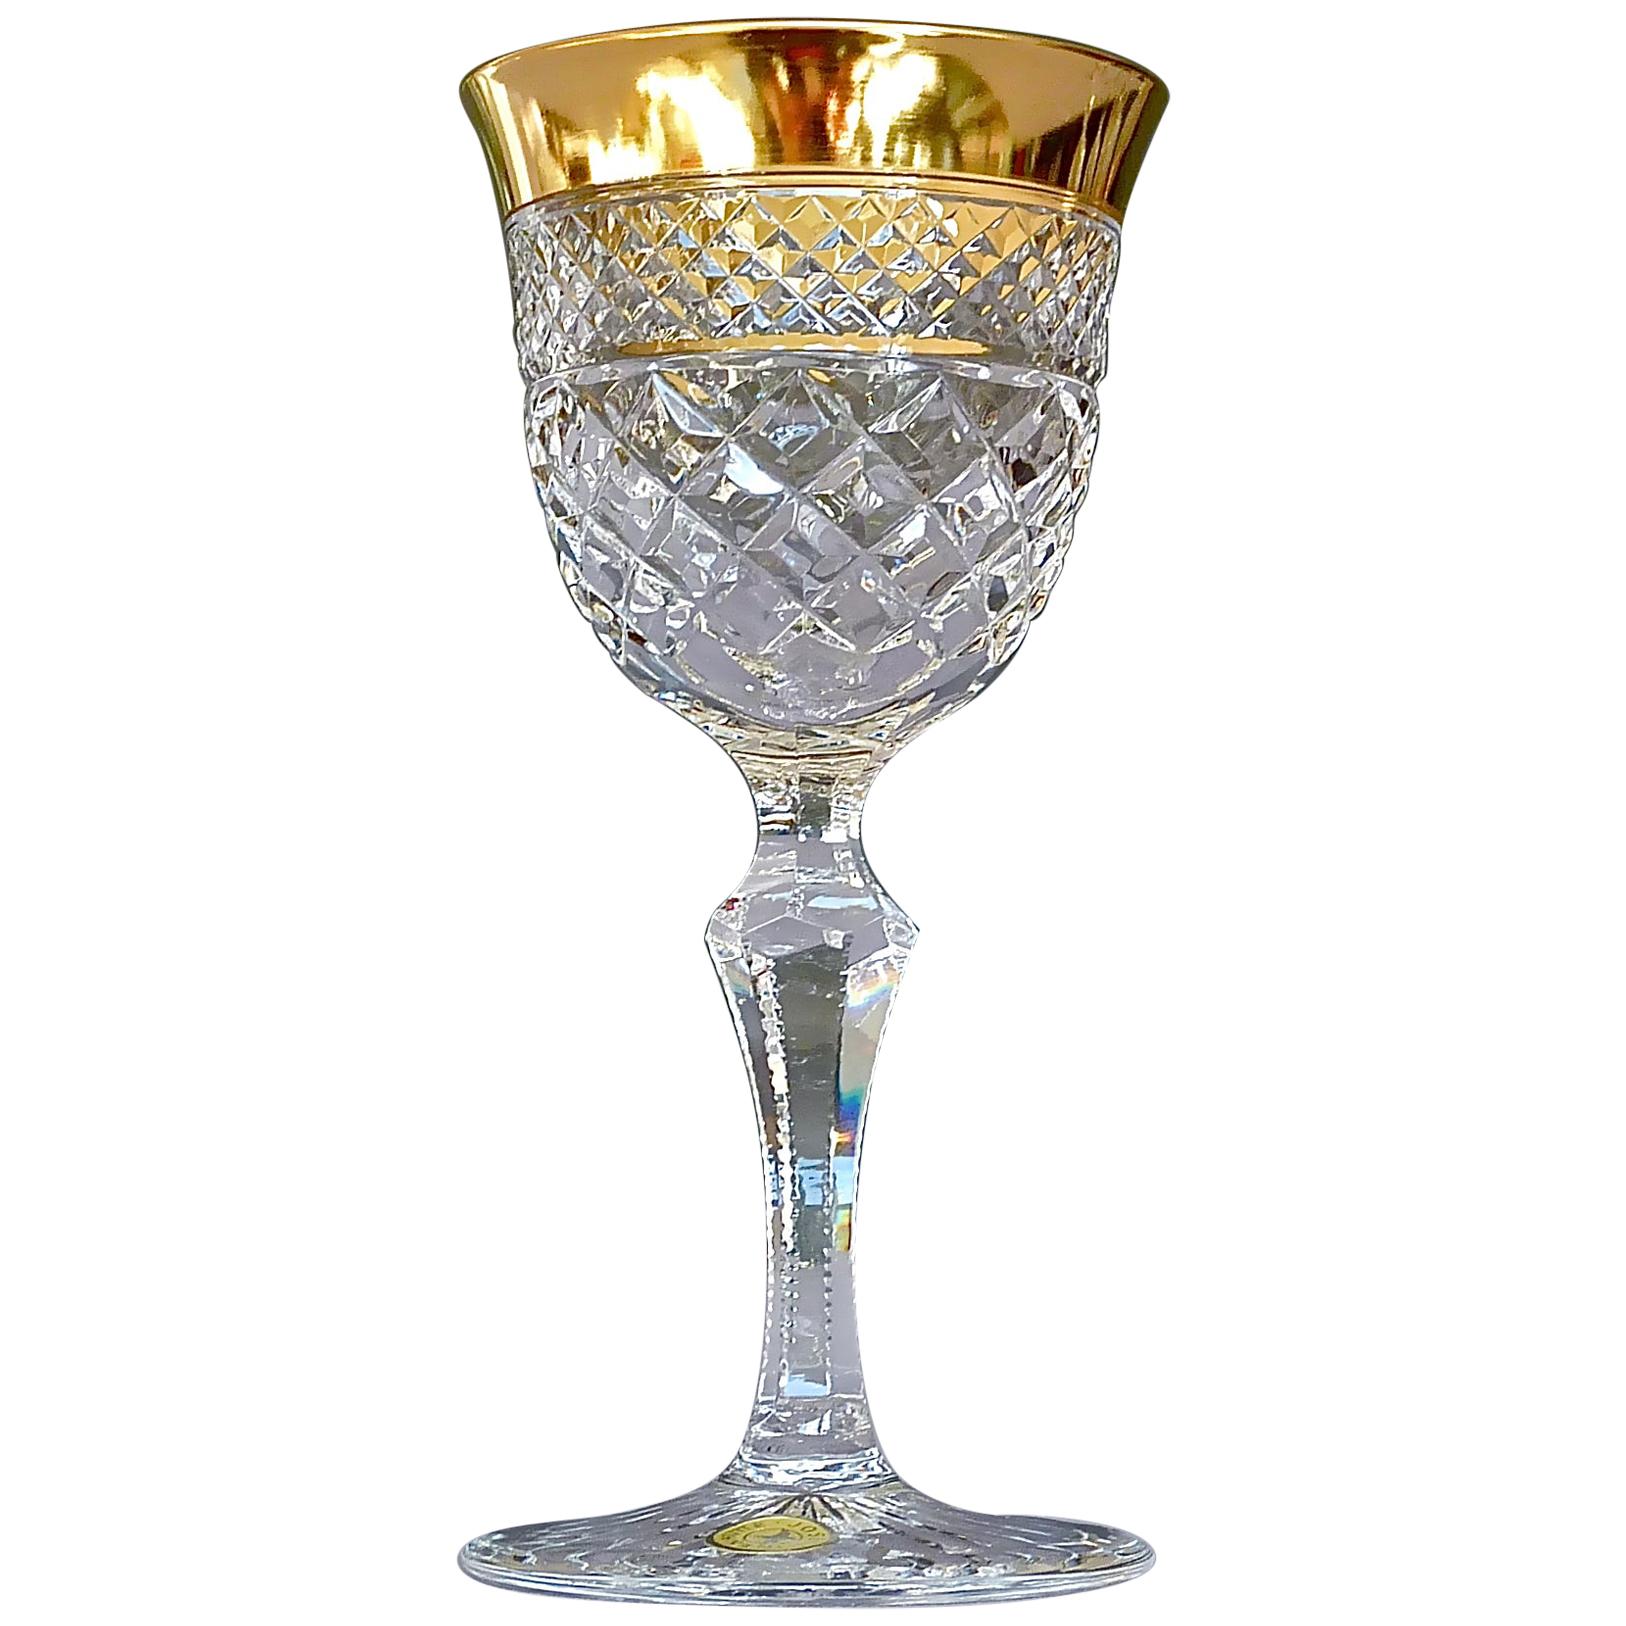 Precious 6 Dessert Wine Glasses Gold Crystal Stemware Josephinenhuette Moser